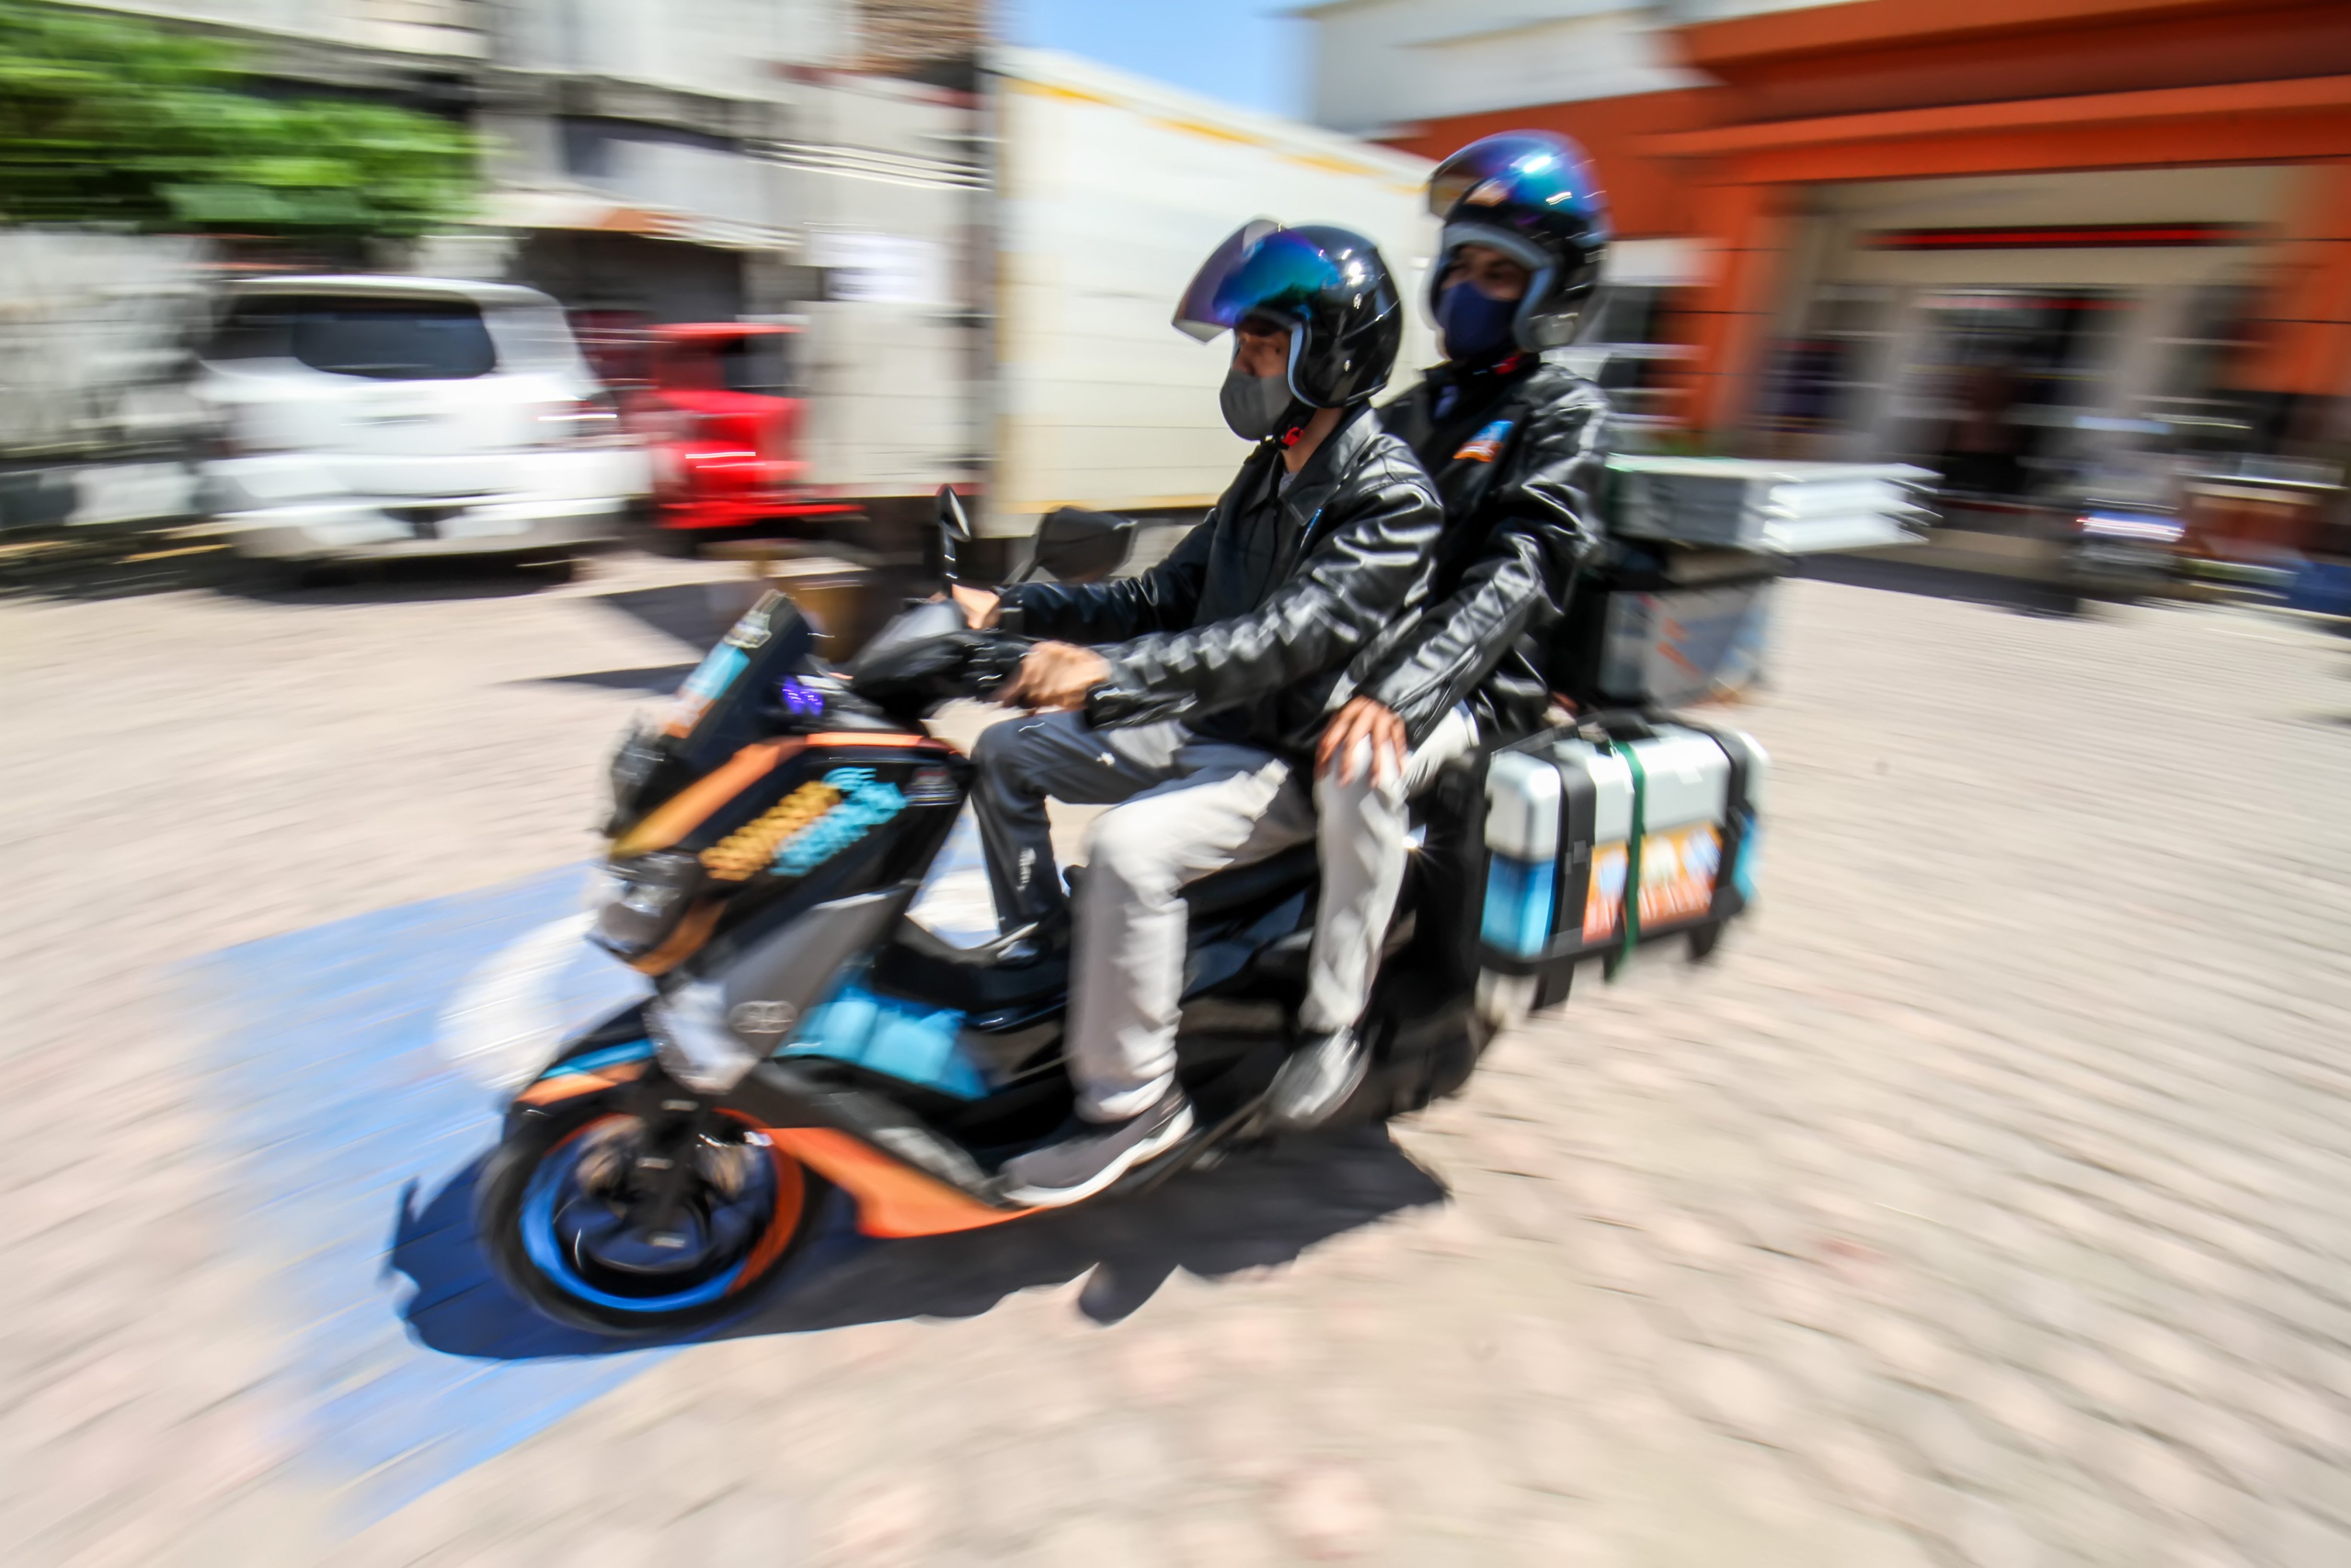 Petugas menaiki sepeda motor Sijempol untuk menjemput pembayaran pajak kendaraan secara daring di Desa Panggoi, Lhoksumawe, Aceh.